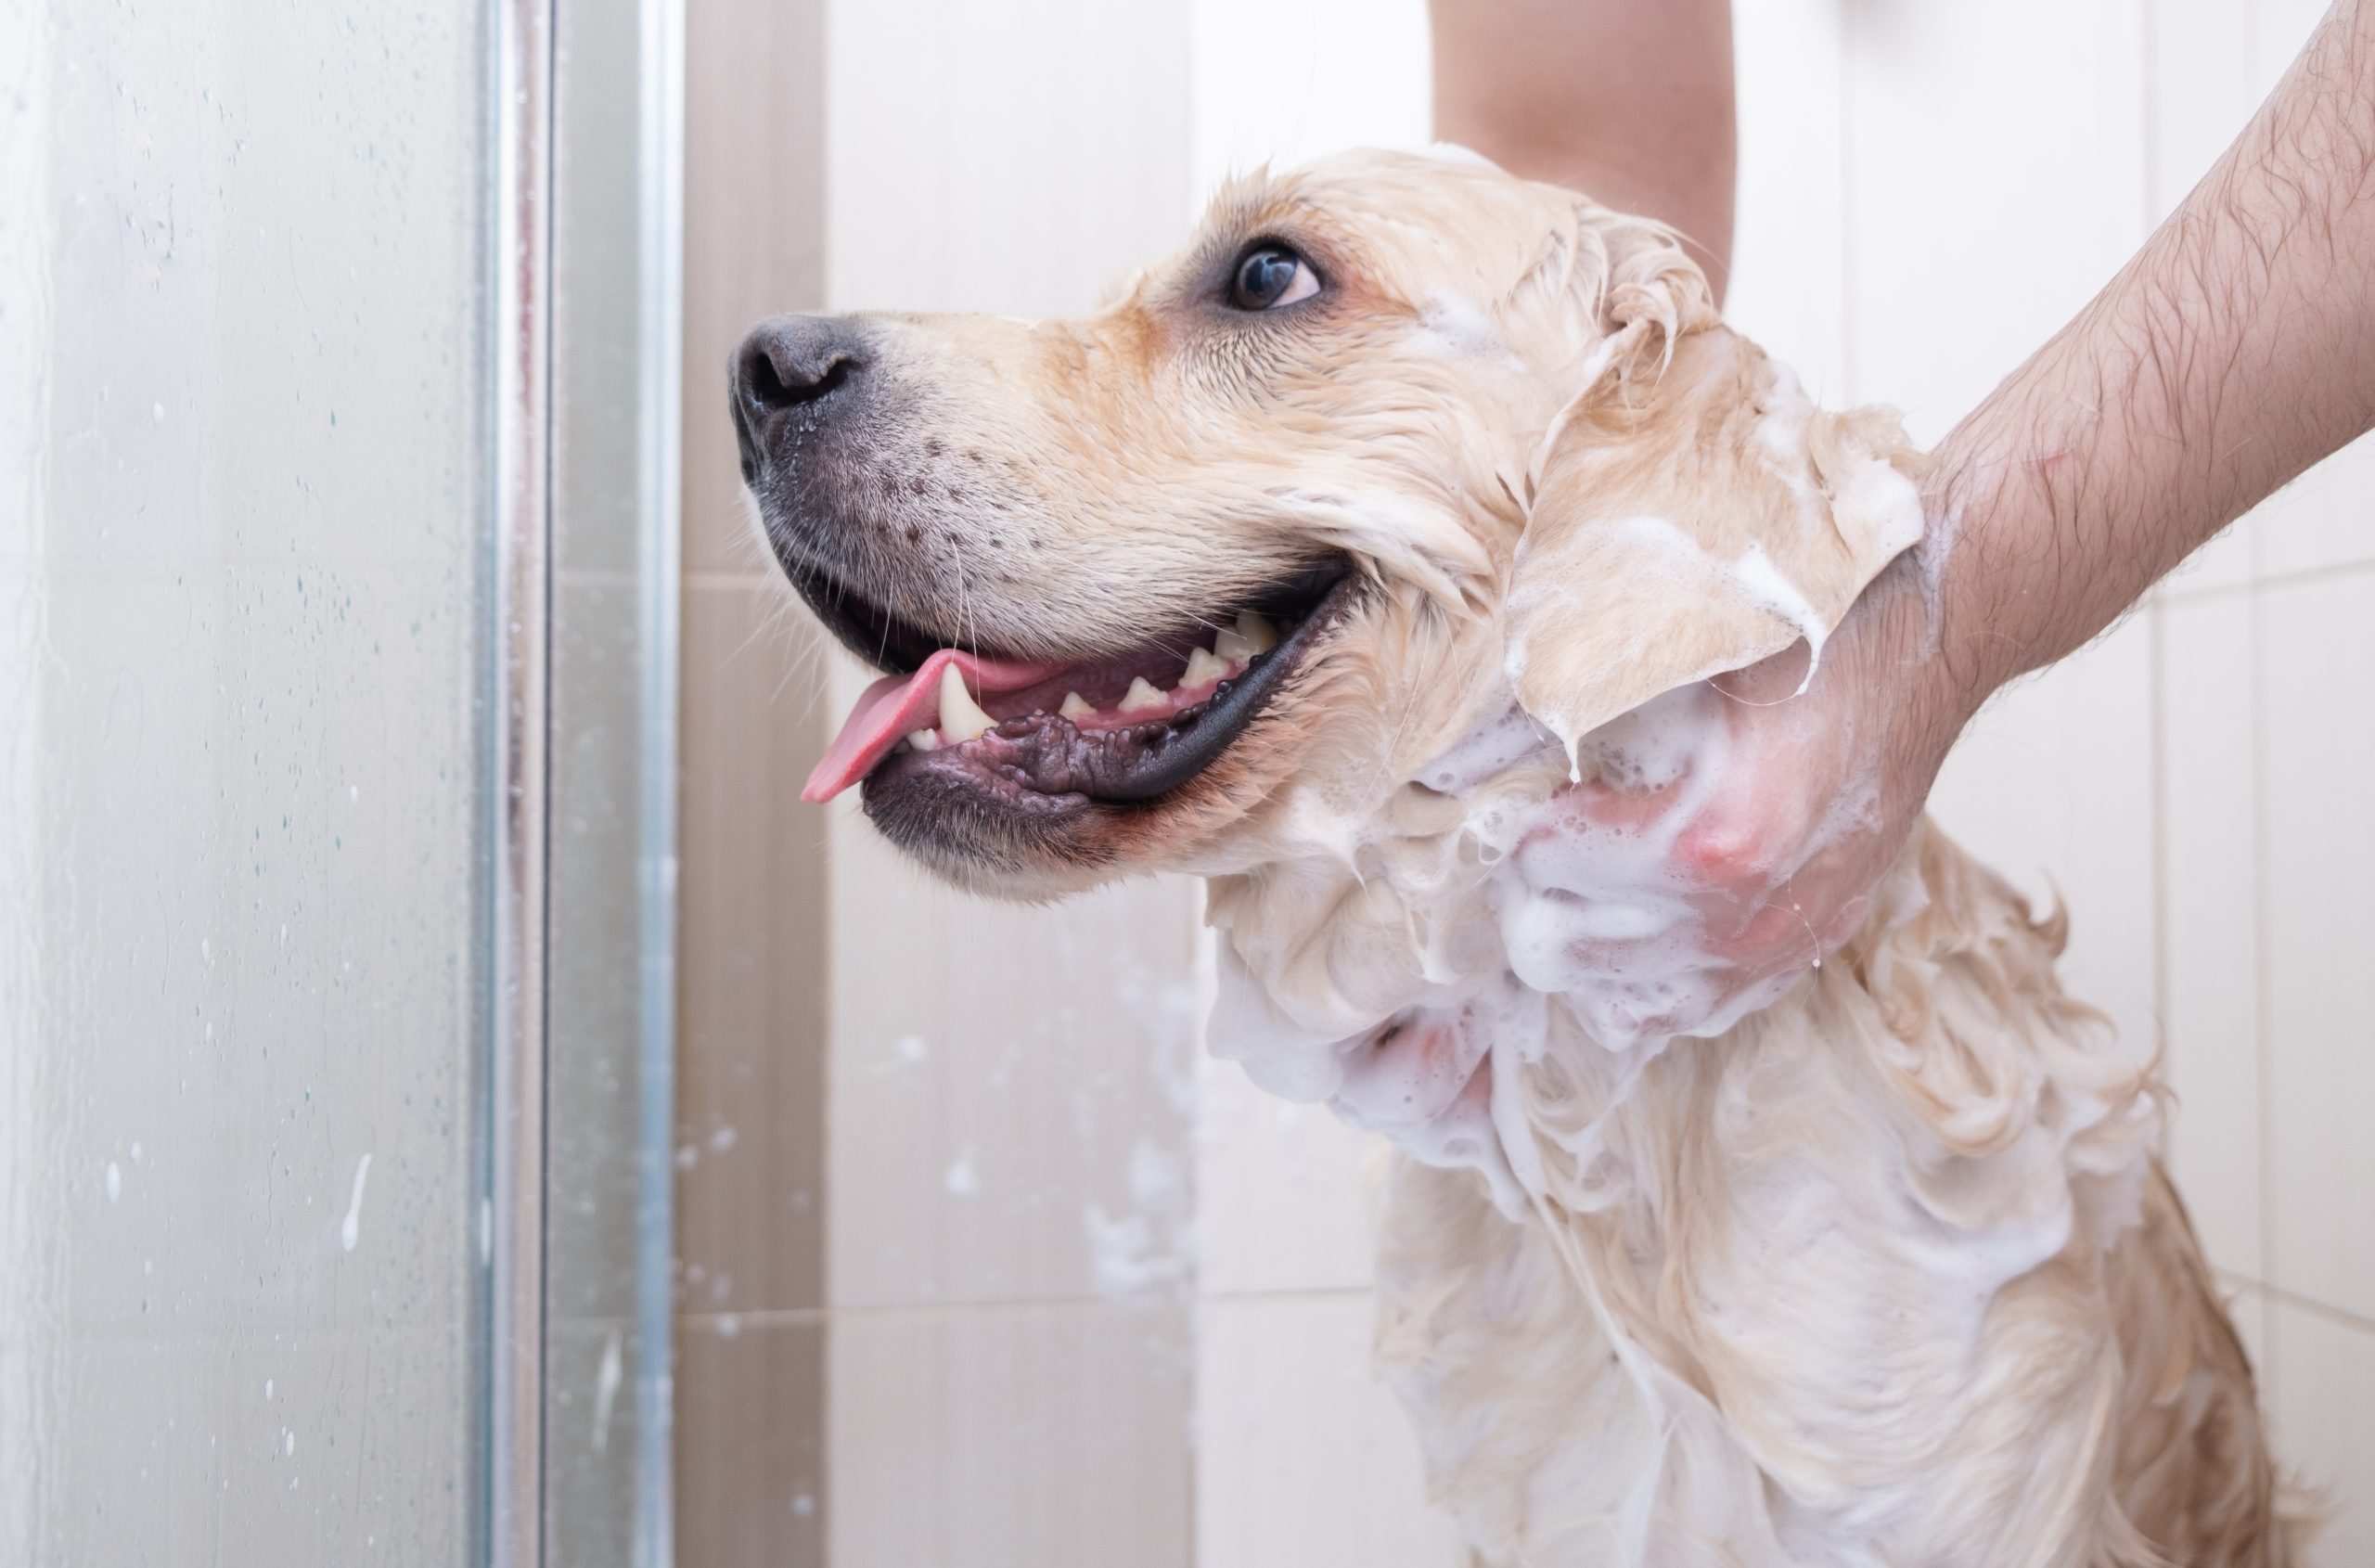 the dog takes a shower with shampoo 2021 12 01 20 03 36 utc scaled